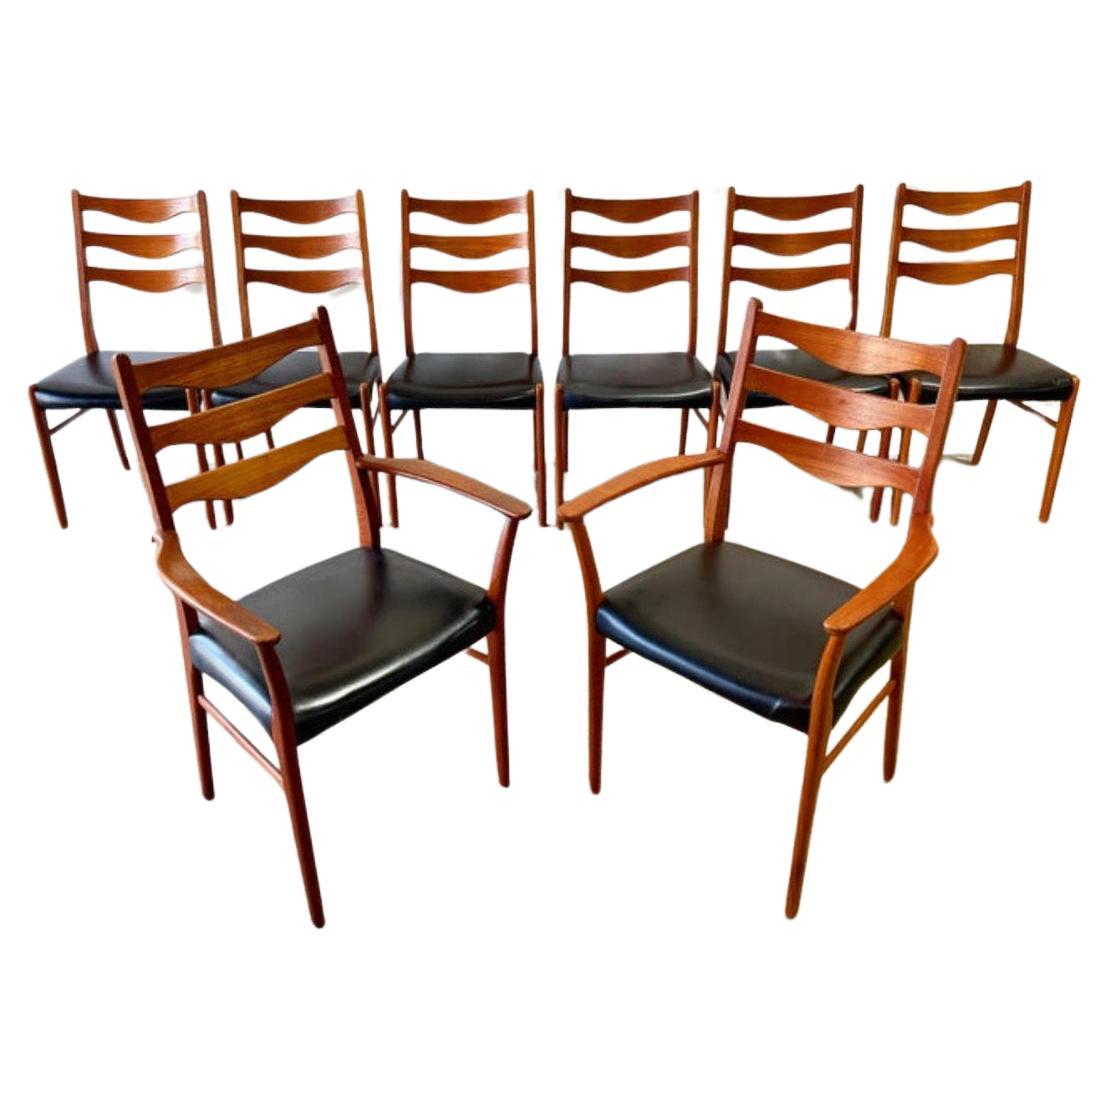  Set of 8, Midcentury Danish Modern by Arne Wahl Iversen Dining Chairs in Teak For Sale